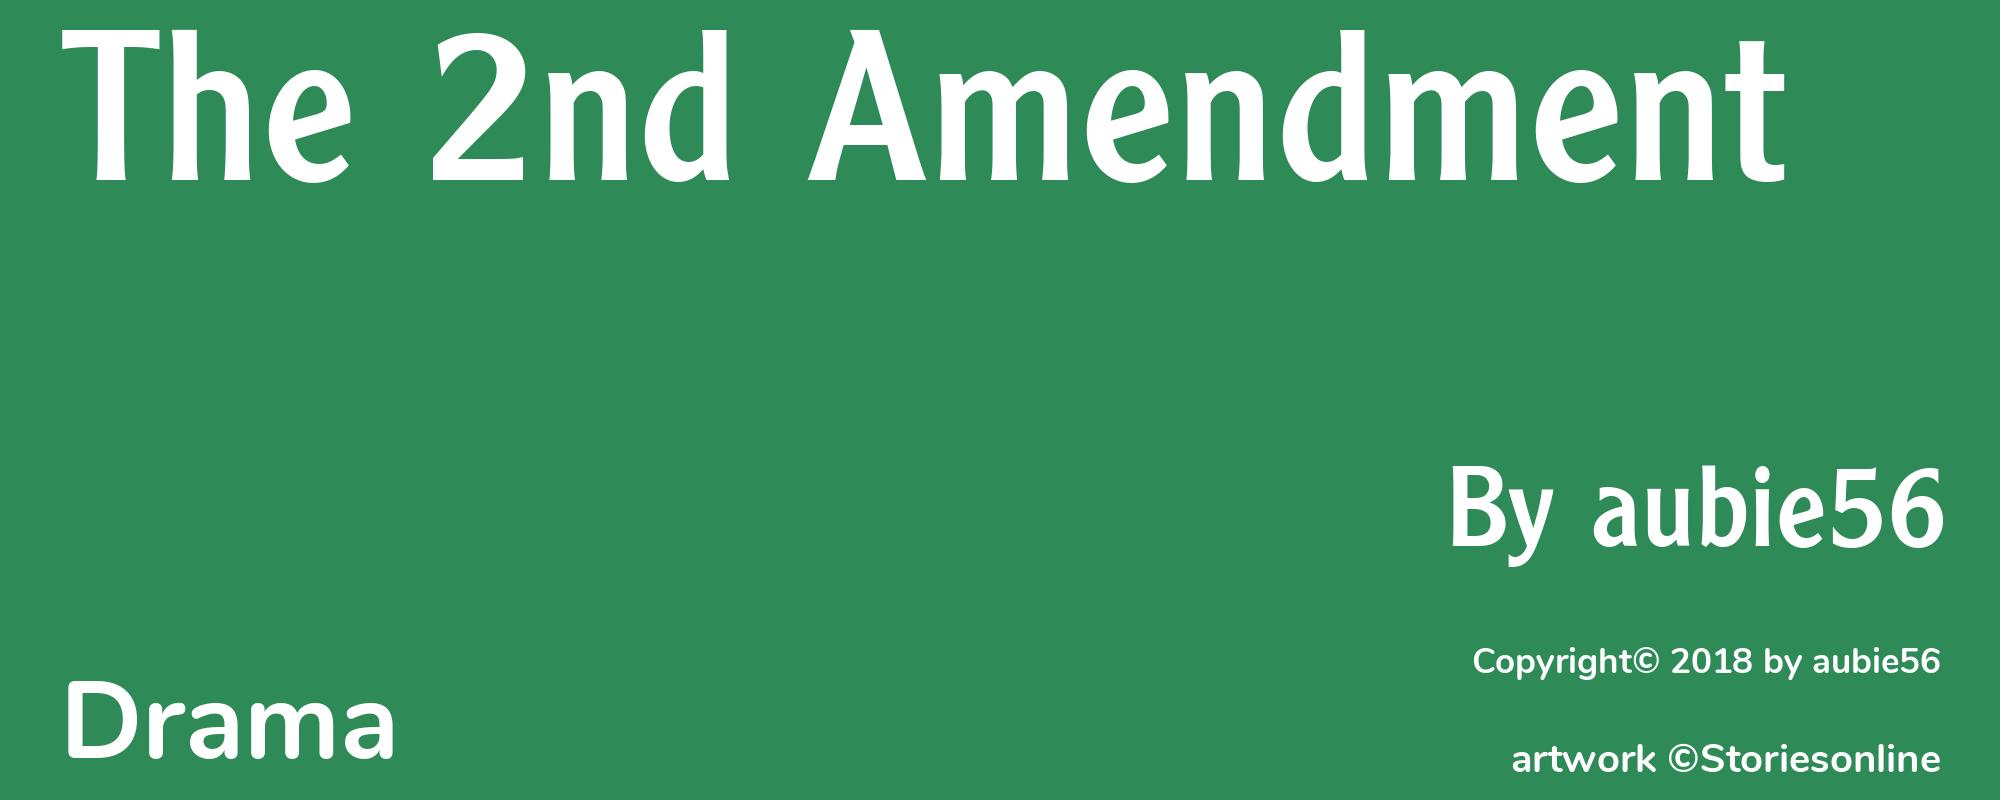 The 2nd Amendment - Cover